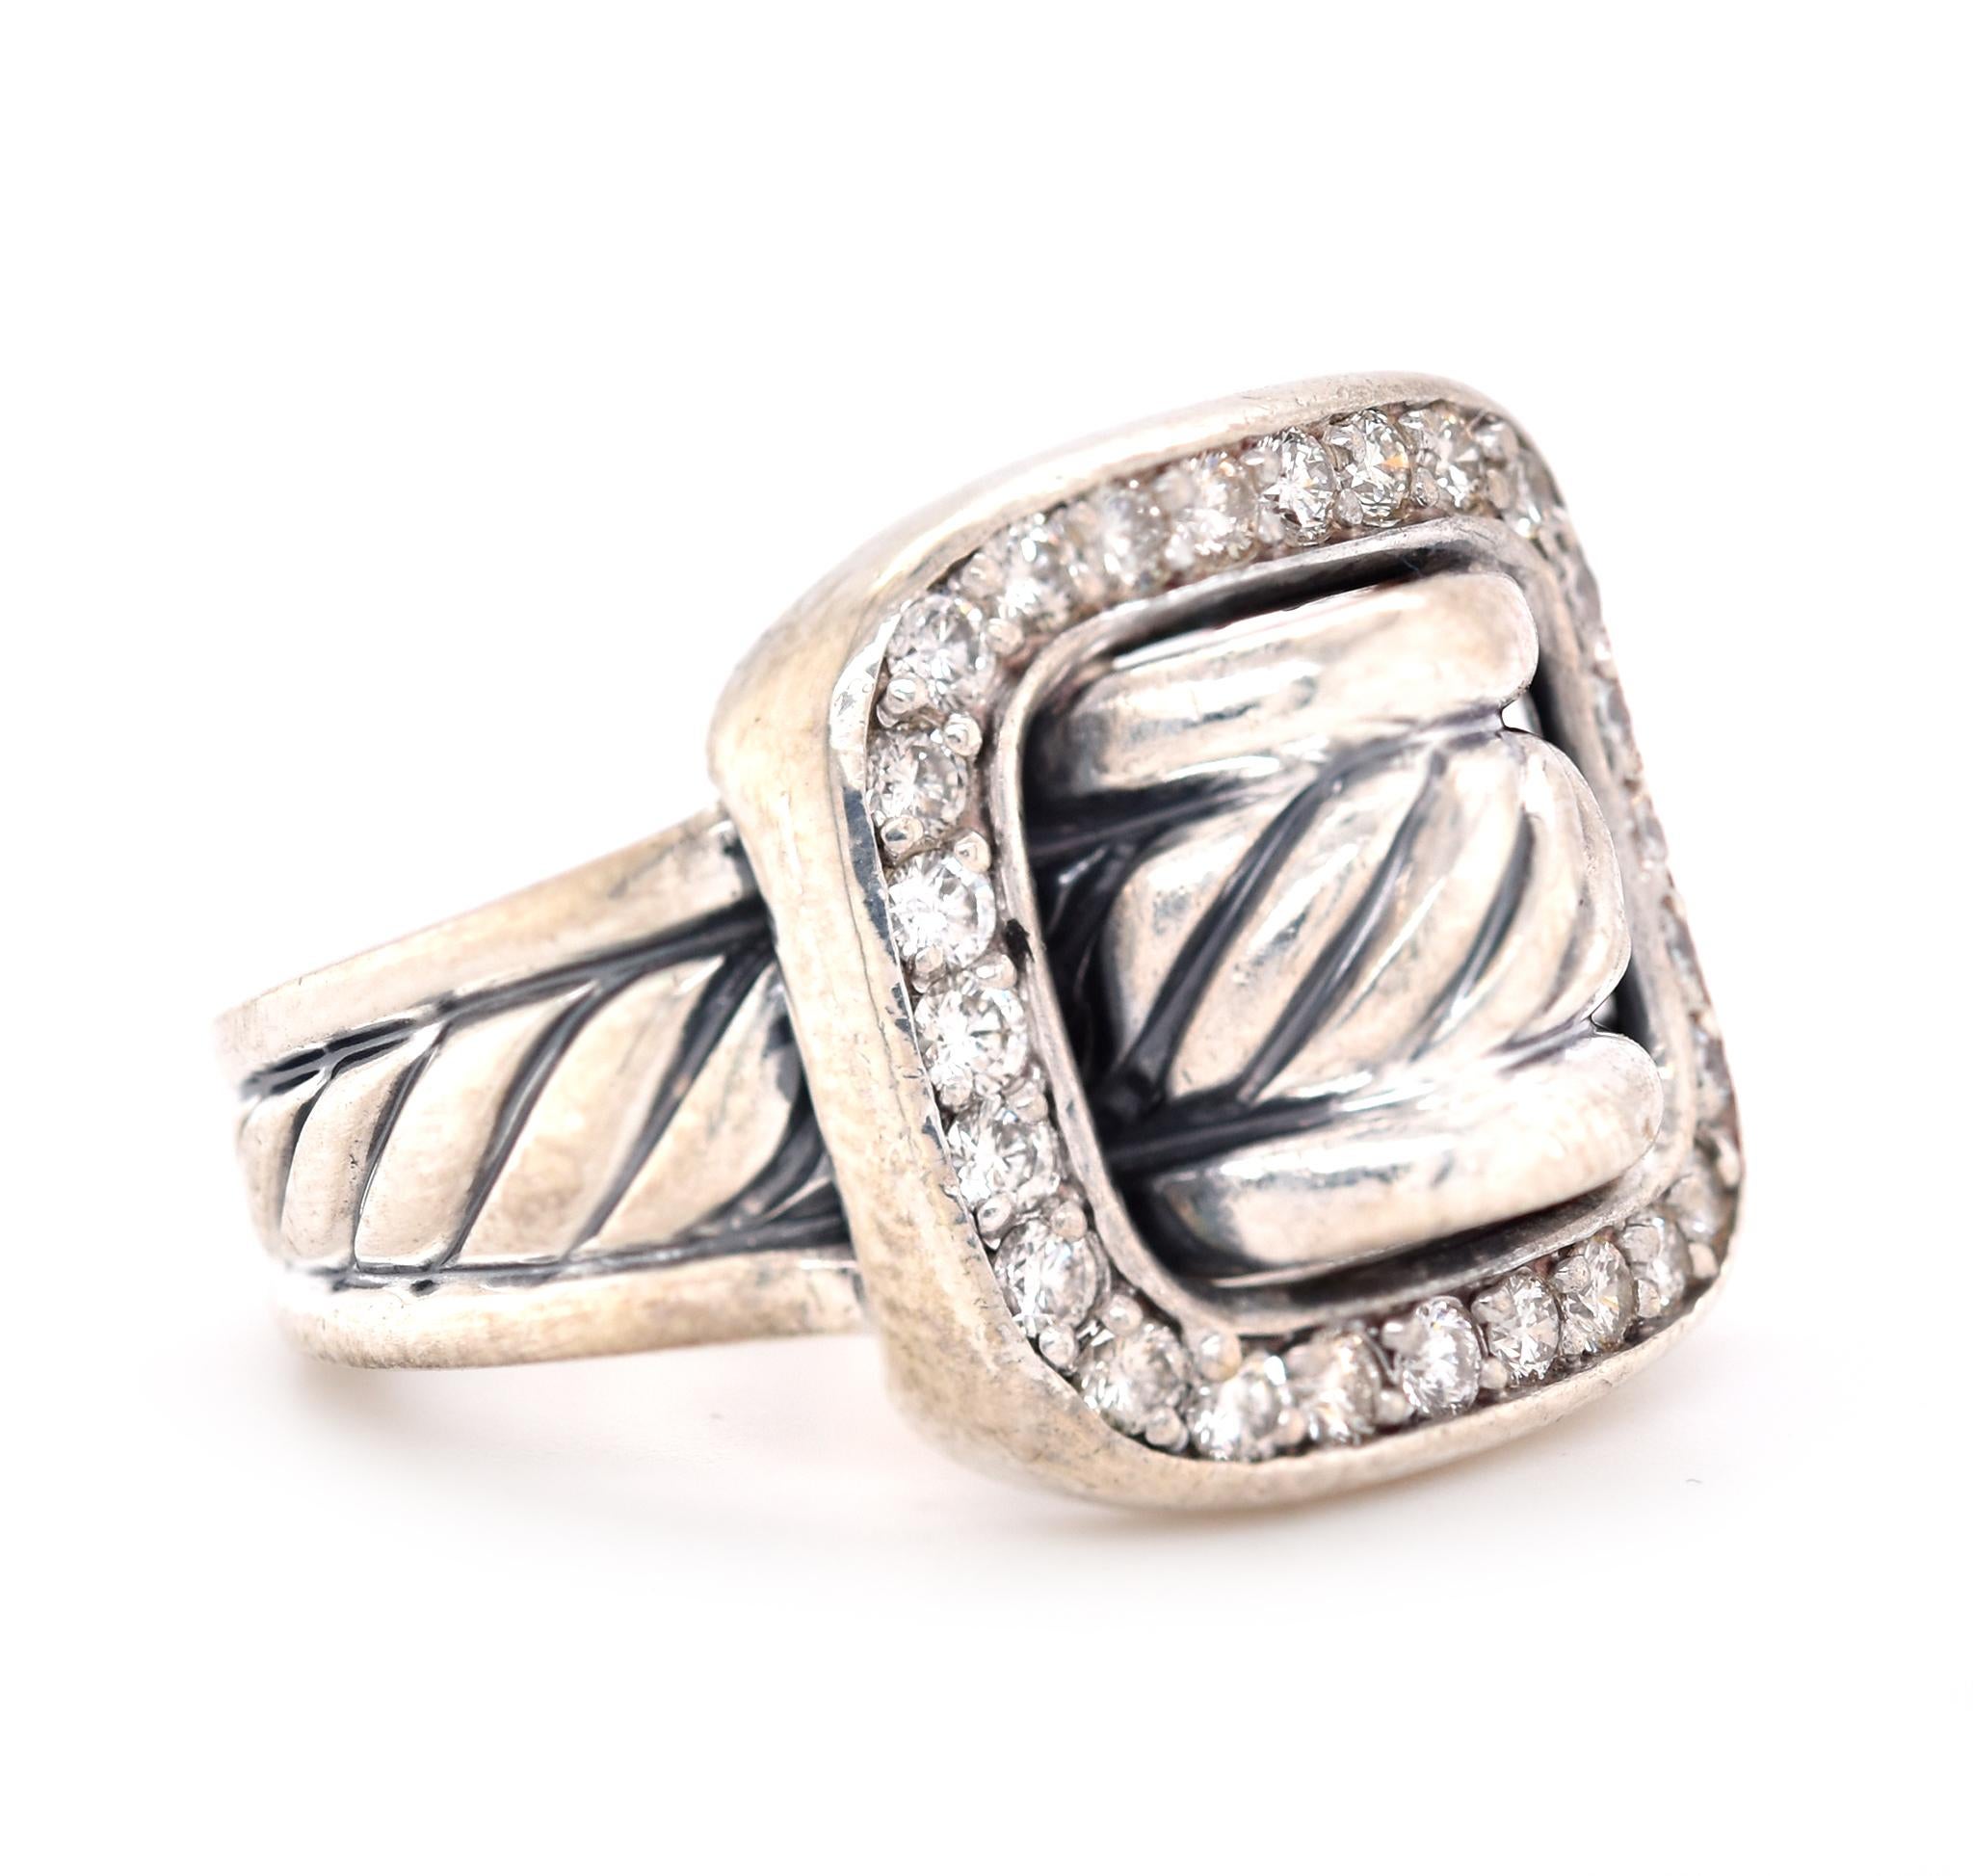 david yurman buckle ring with diamonds